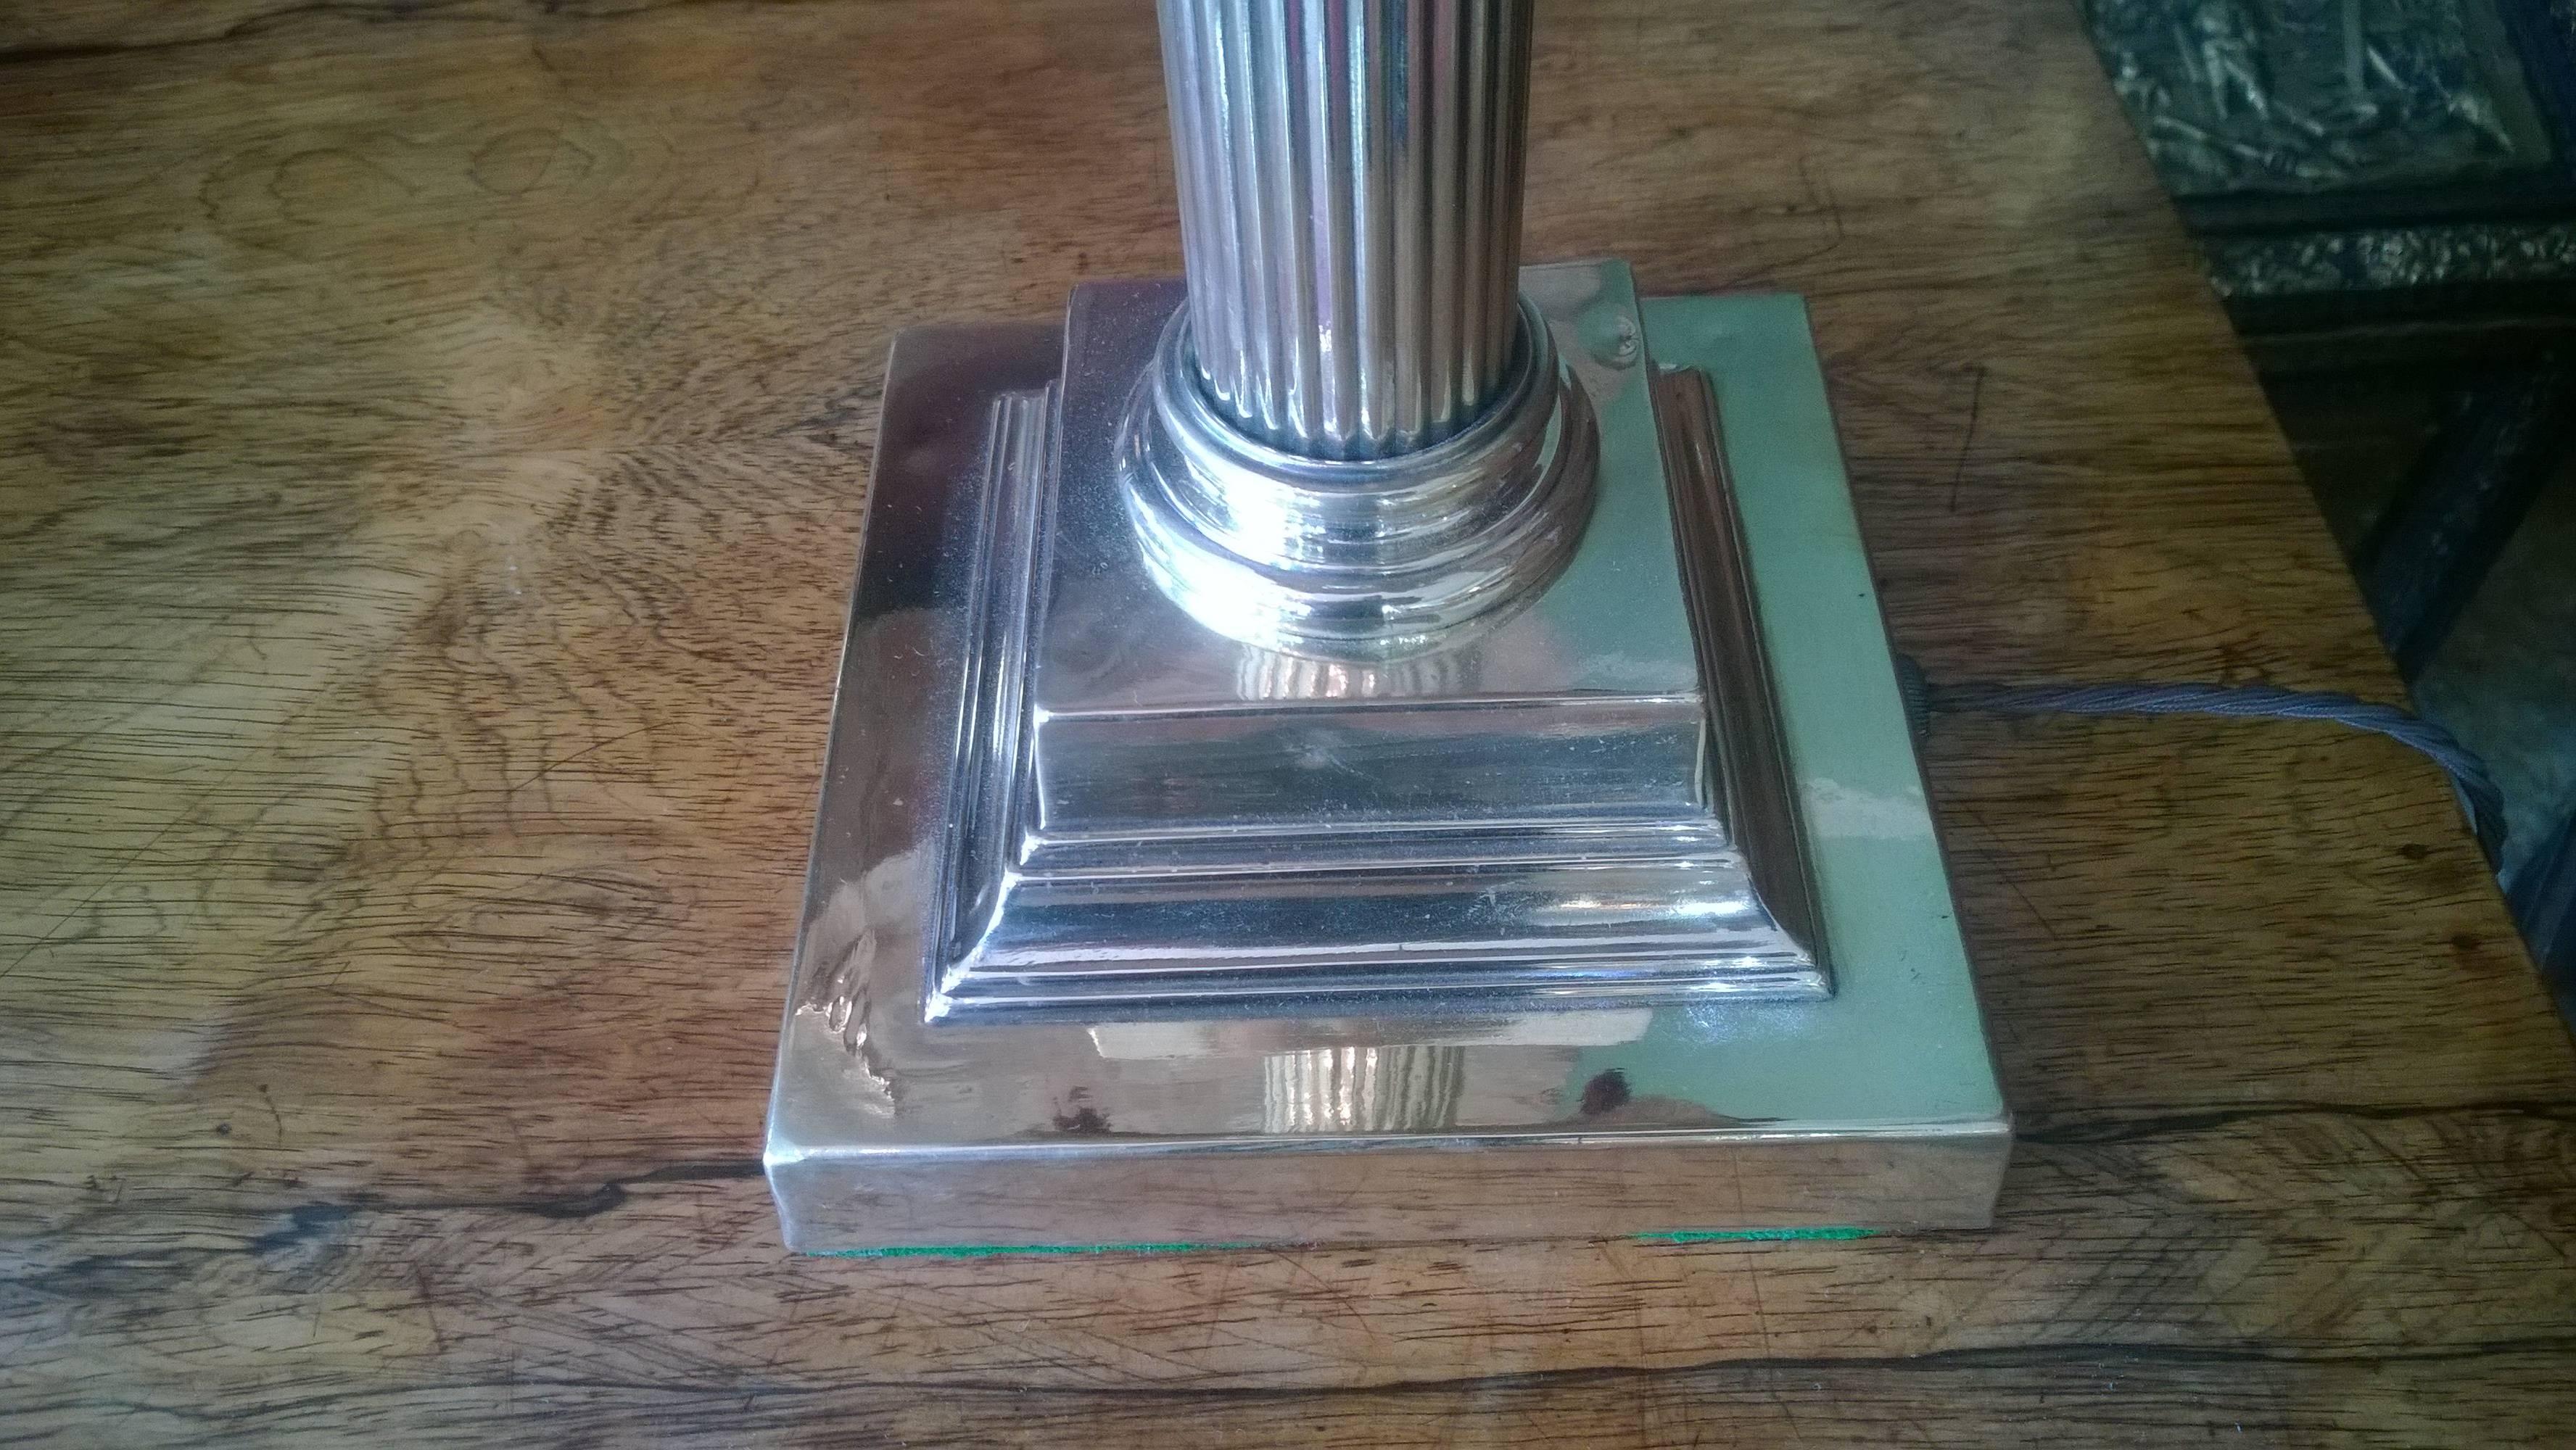 brass corinthian column table lamp